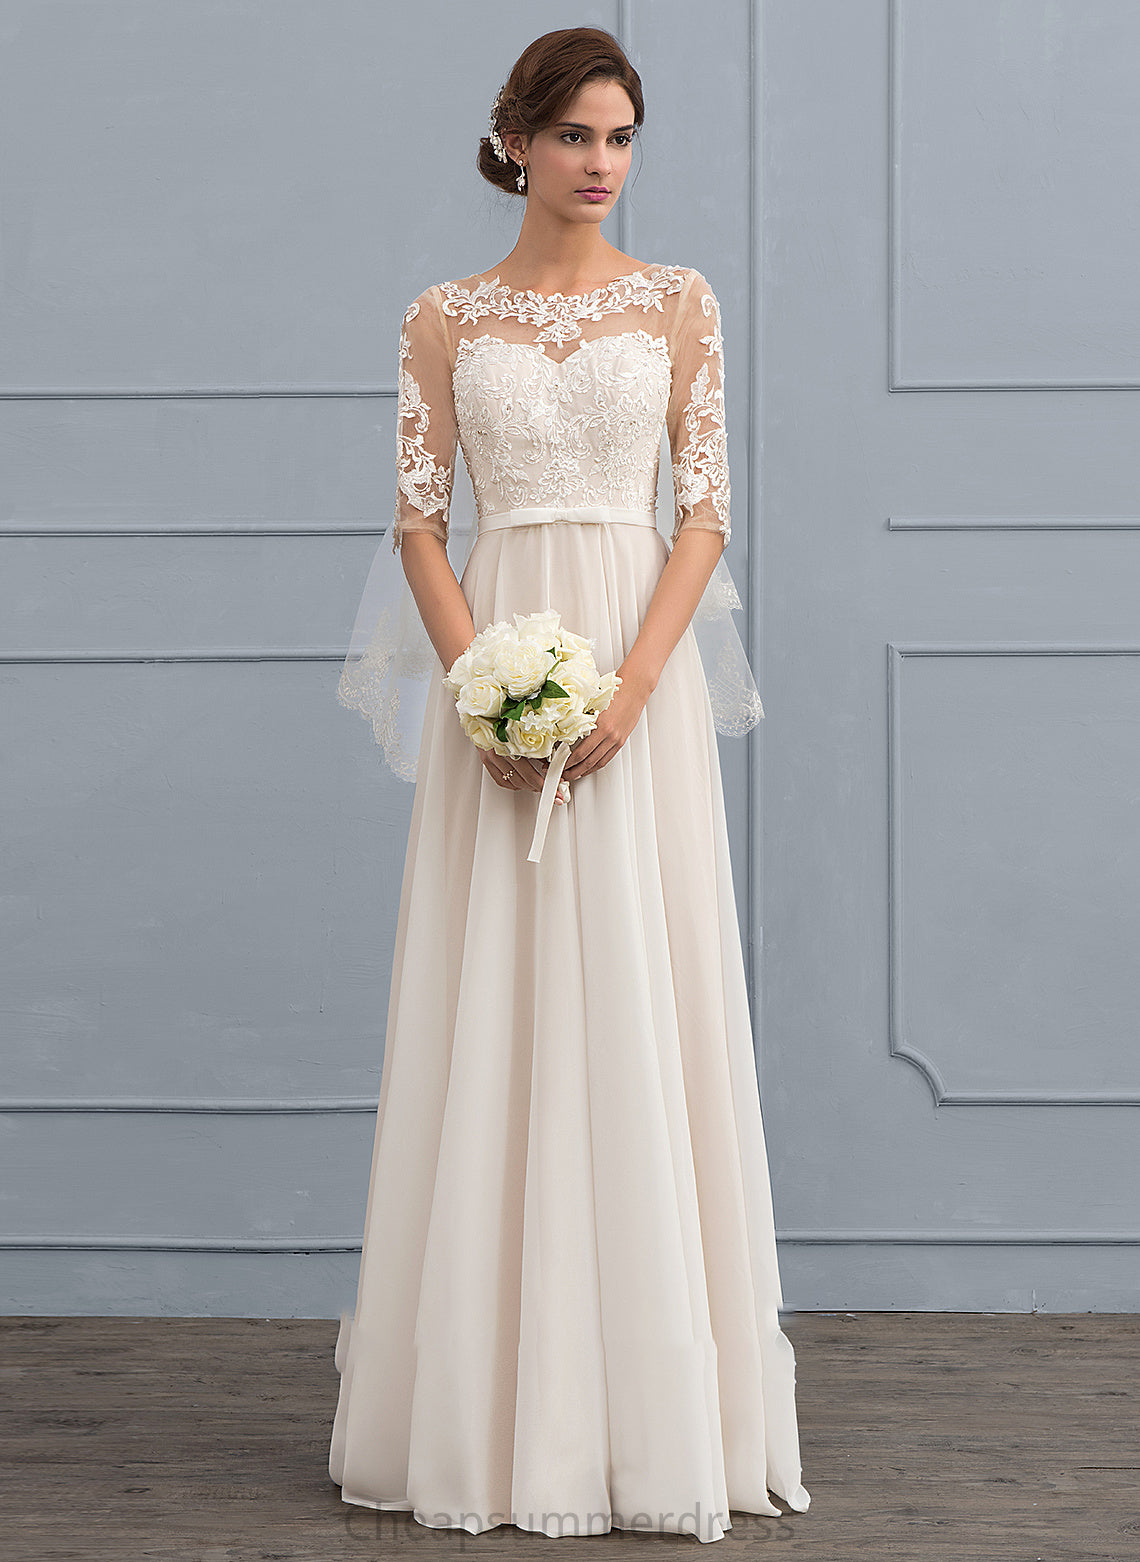 With Illusion Wedding Floor-Length Sequins Bow(s) Beading Dress Wedding Dresses A-Line Kenya Chiffon